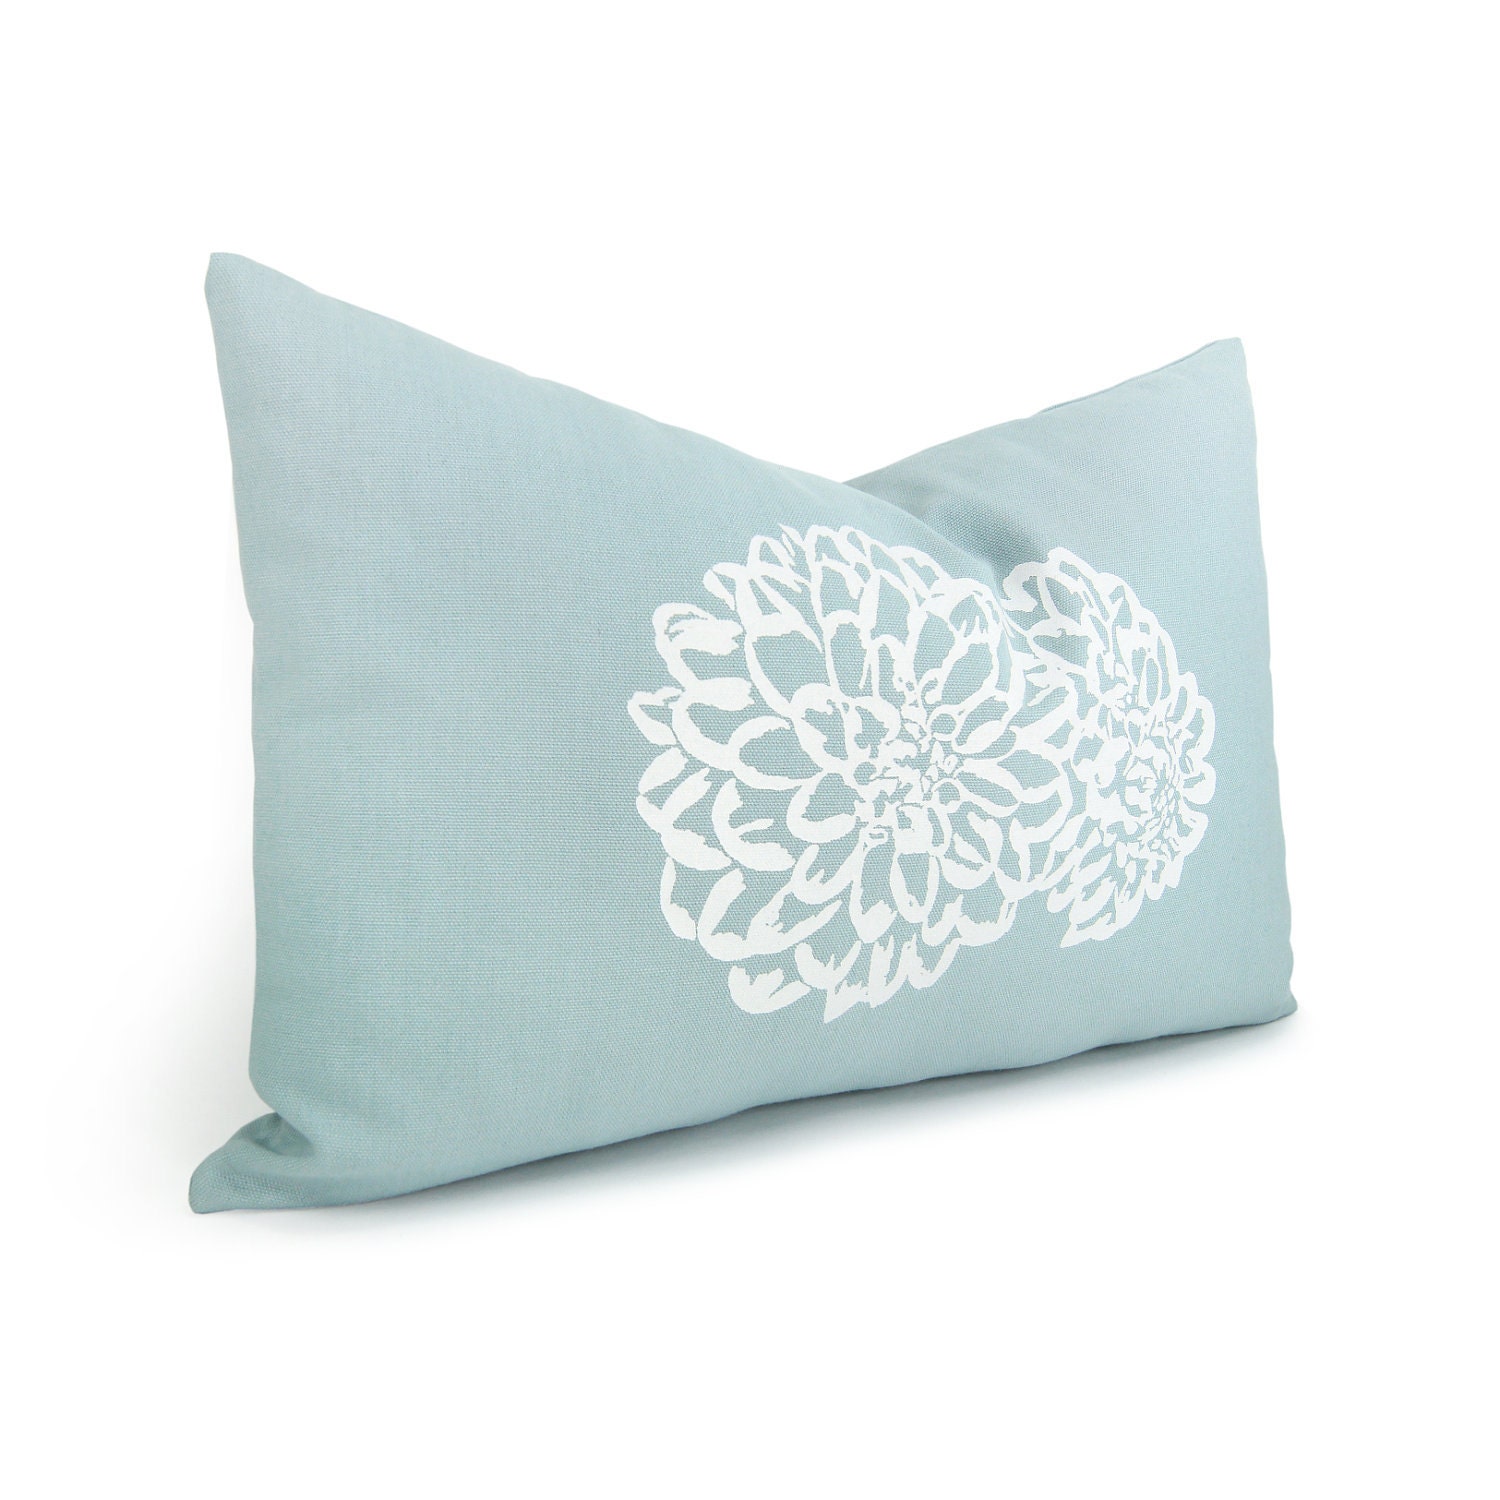 Floral pillow cover - White flowers print on aquamarine blue cotton canvas decorative pillow cover - 12x18 pillow cover - ClassicByNature